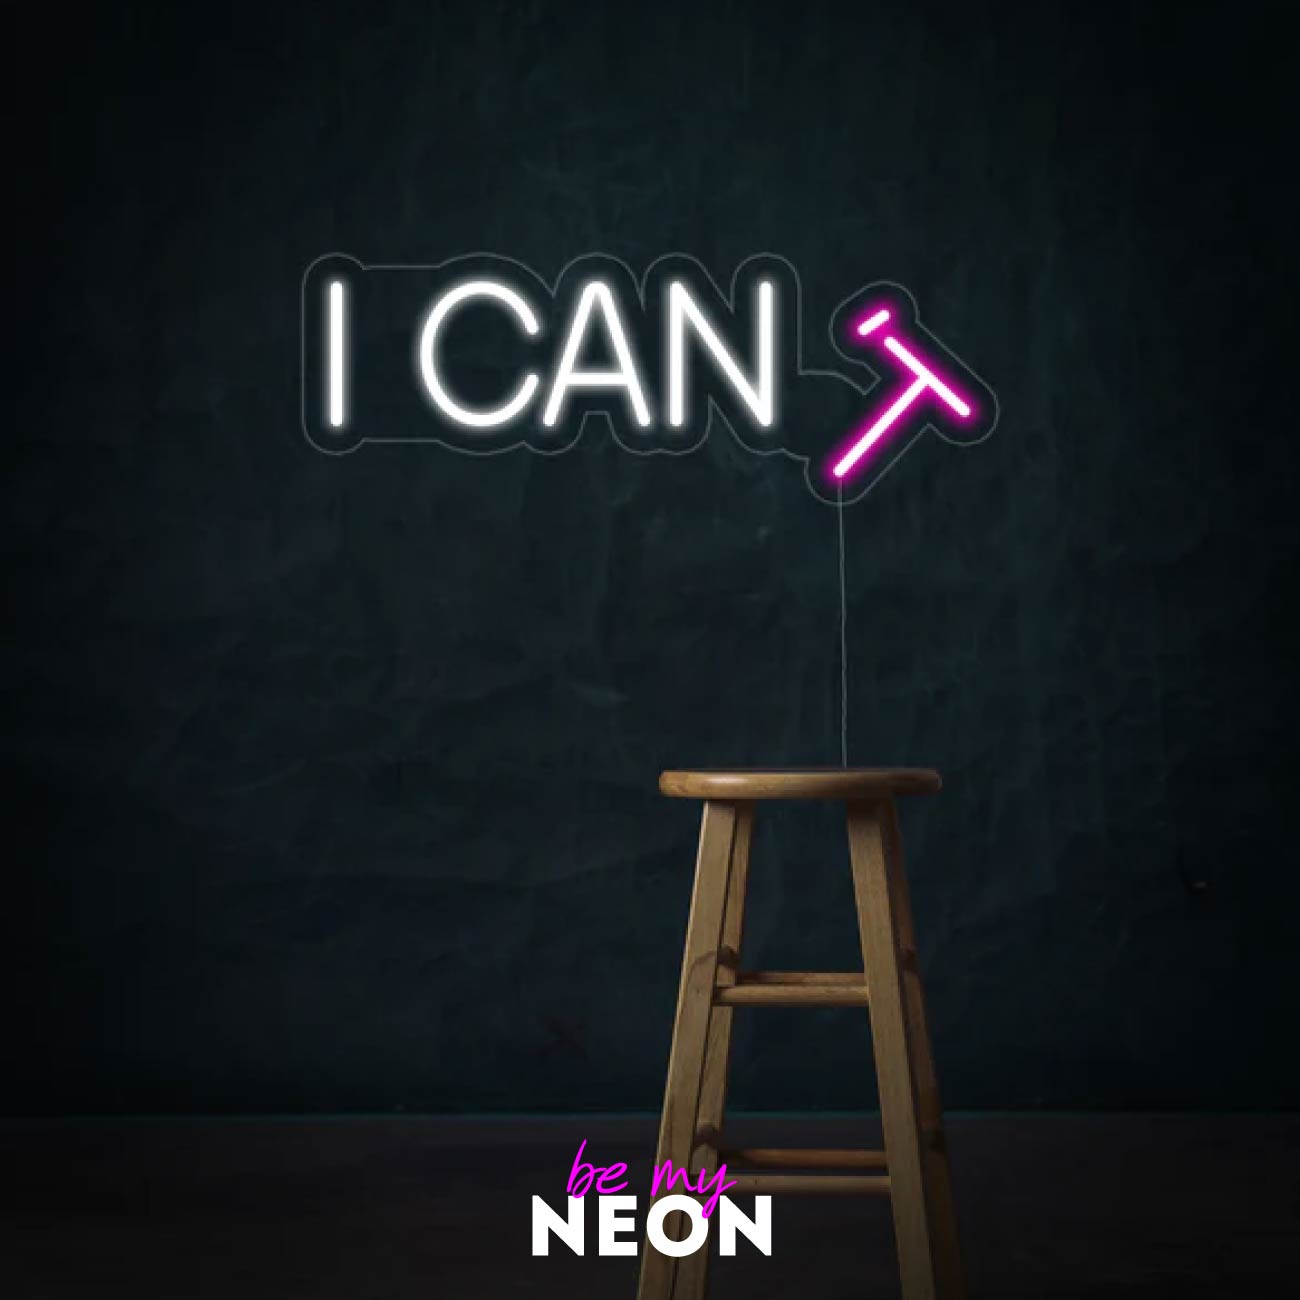 "I CAN T" Leuchtmotiv aus LED Neon